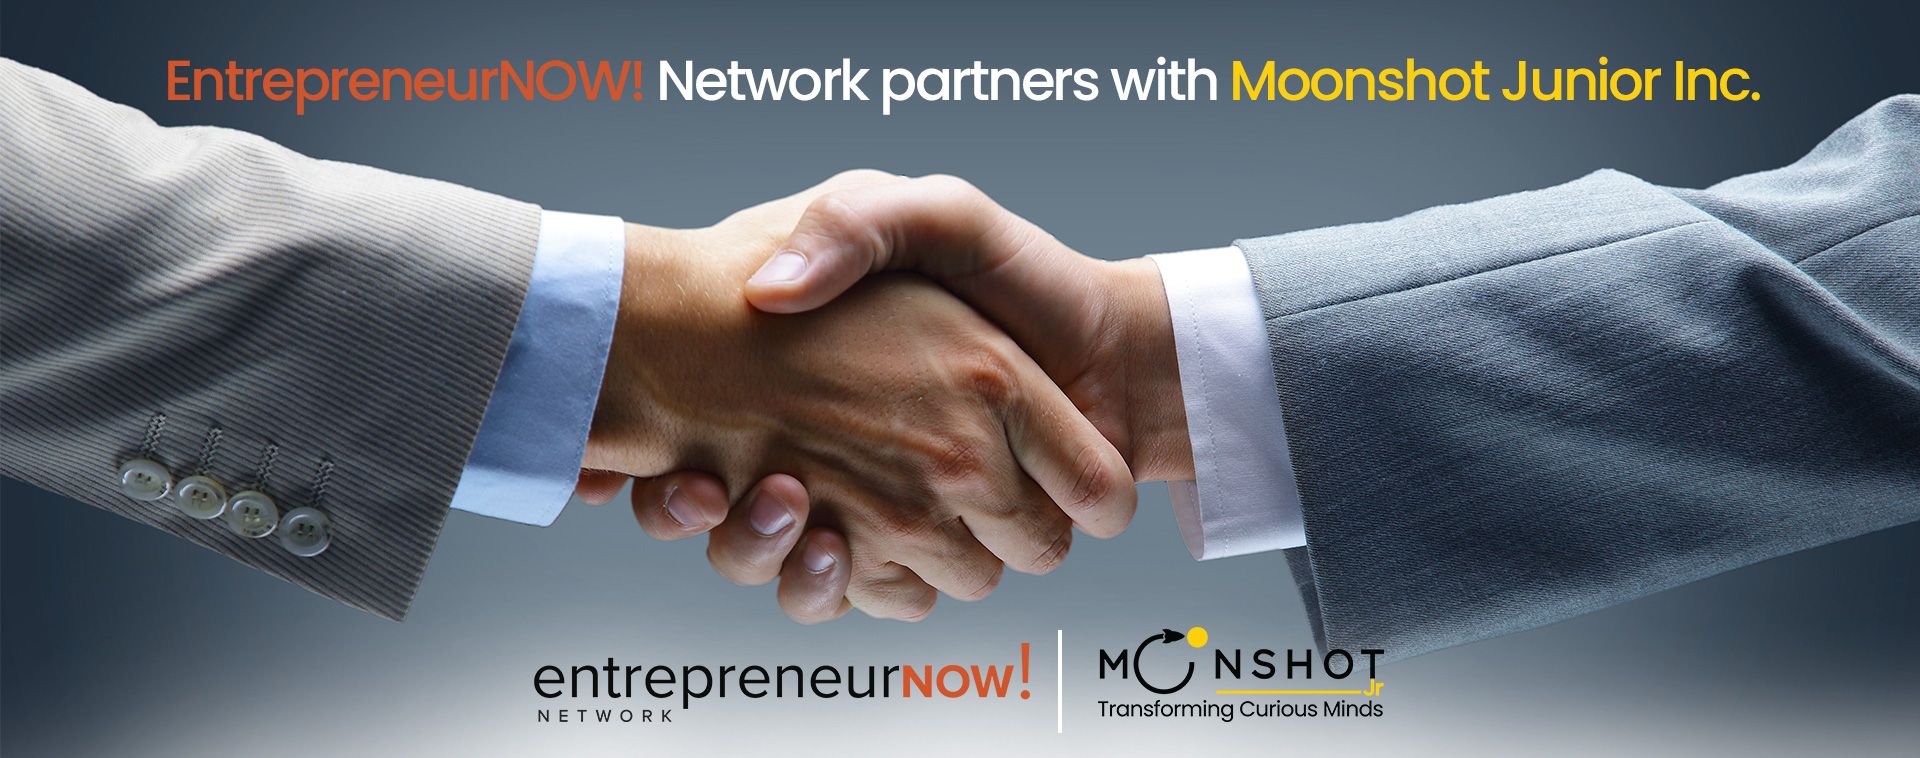 EntrepreneurNOW! Network partners with Moonshot Junior Inc.